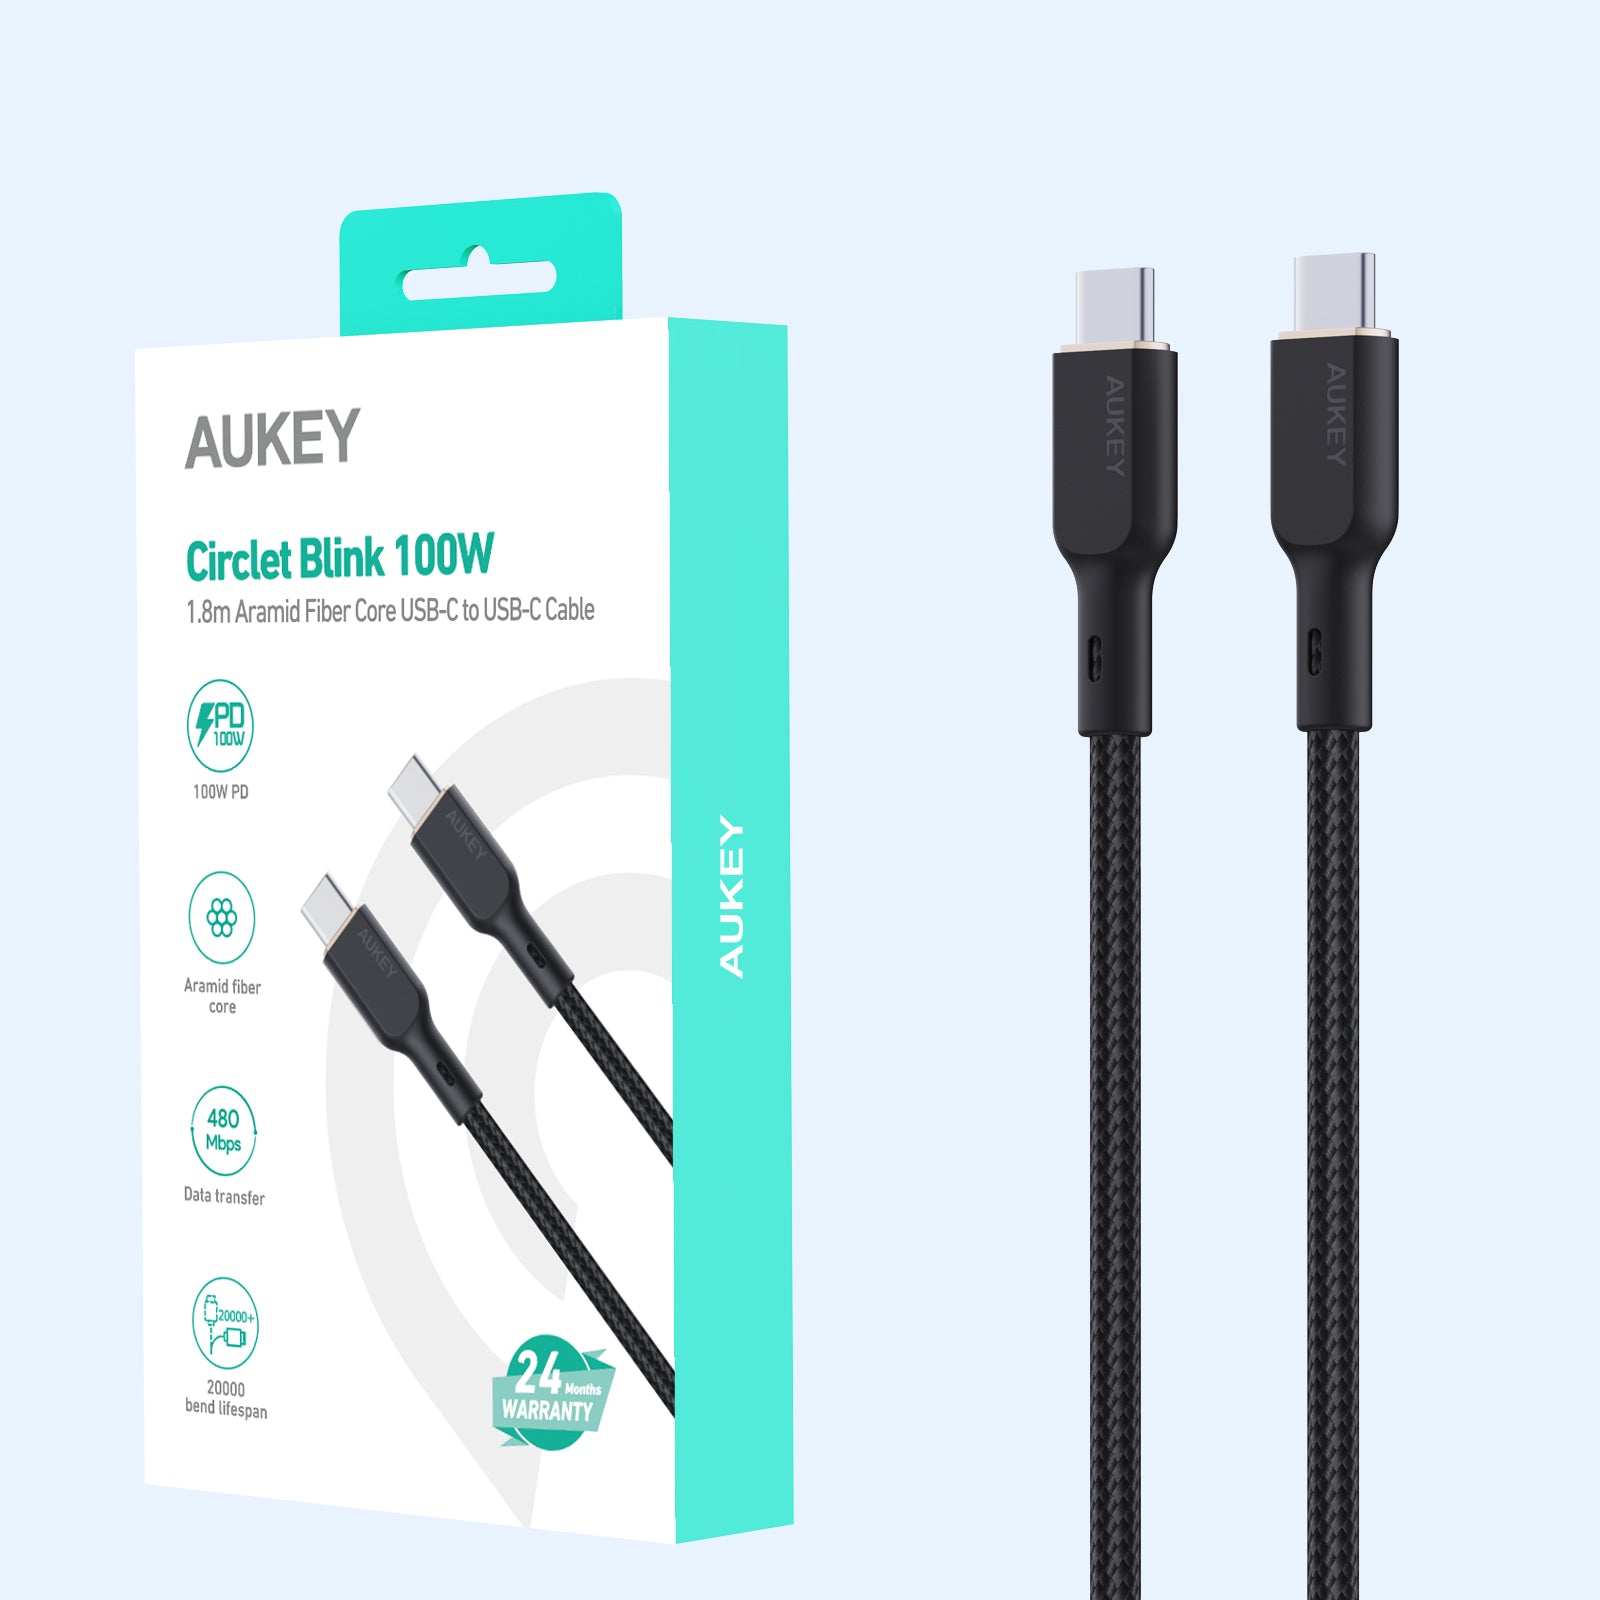 AUKEY CB-KCC102 Circlet Blink 100W 1.8m Aramid Fiber Core USB-C to USB-C Cable